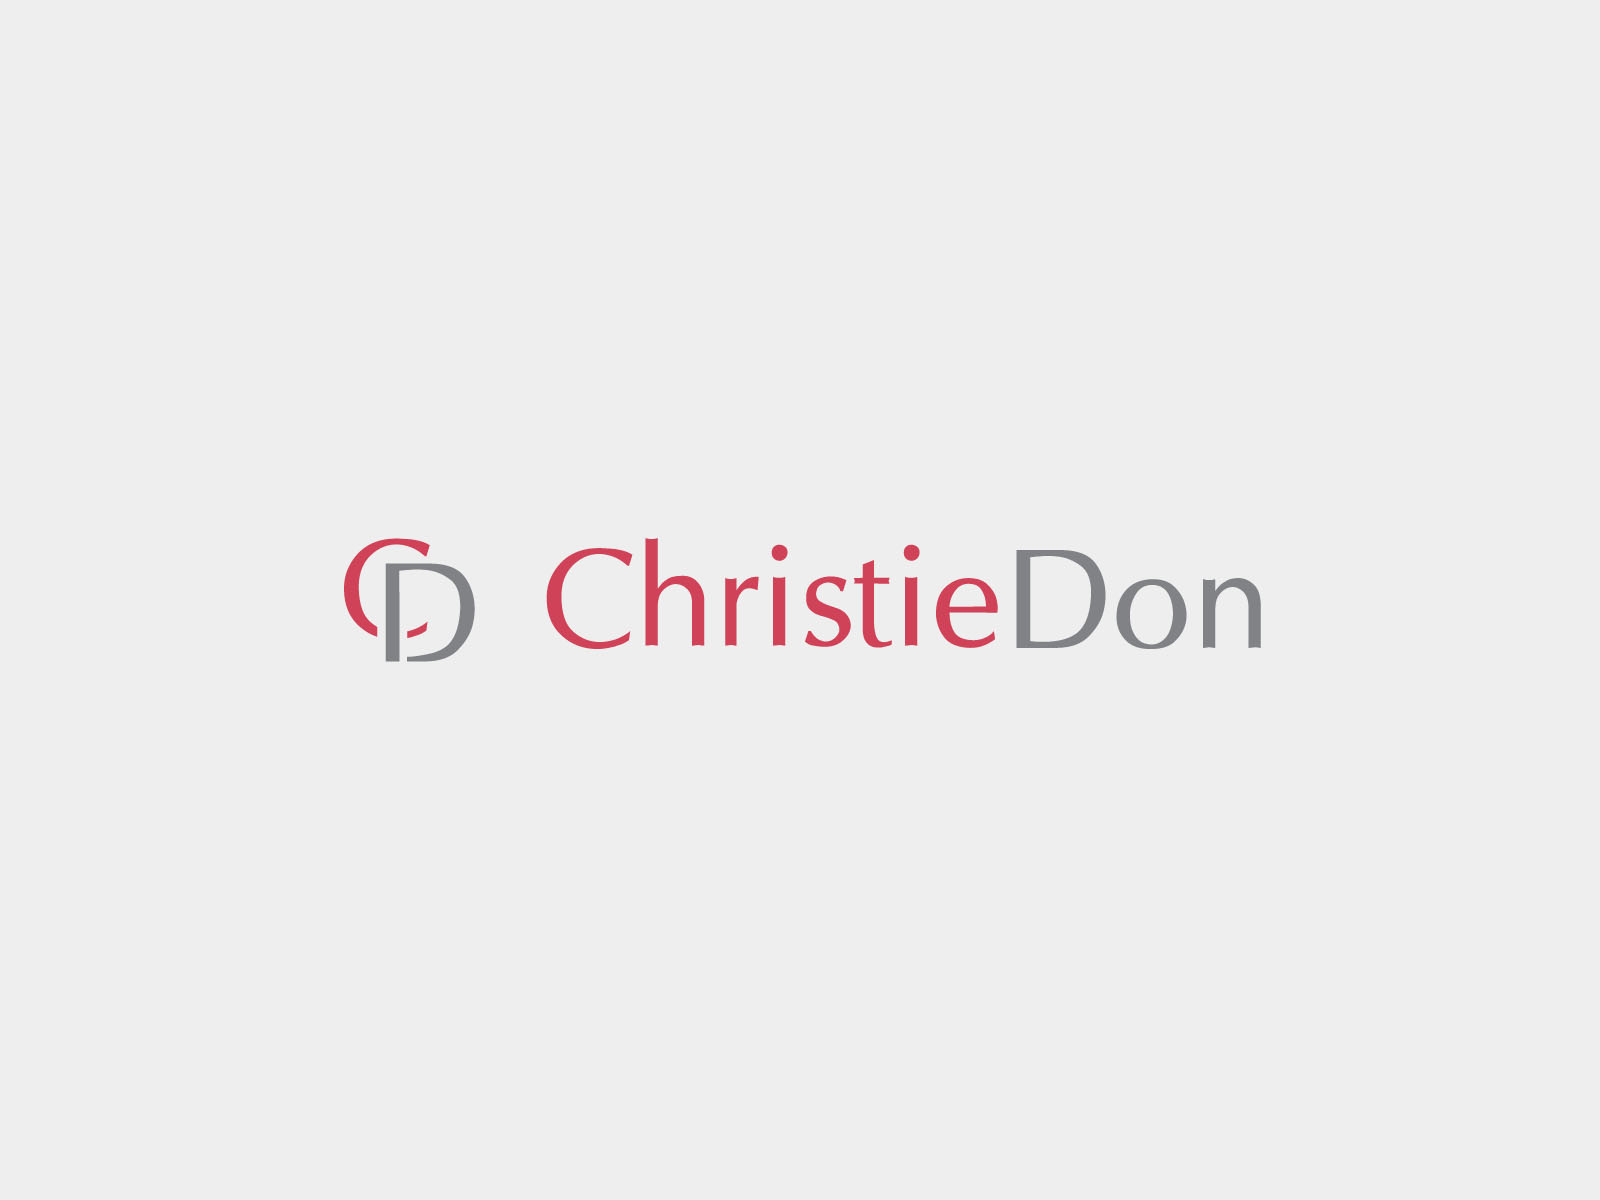 Christie Don